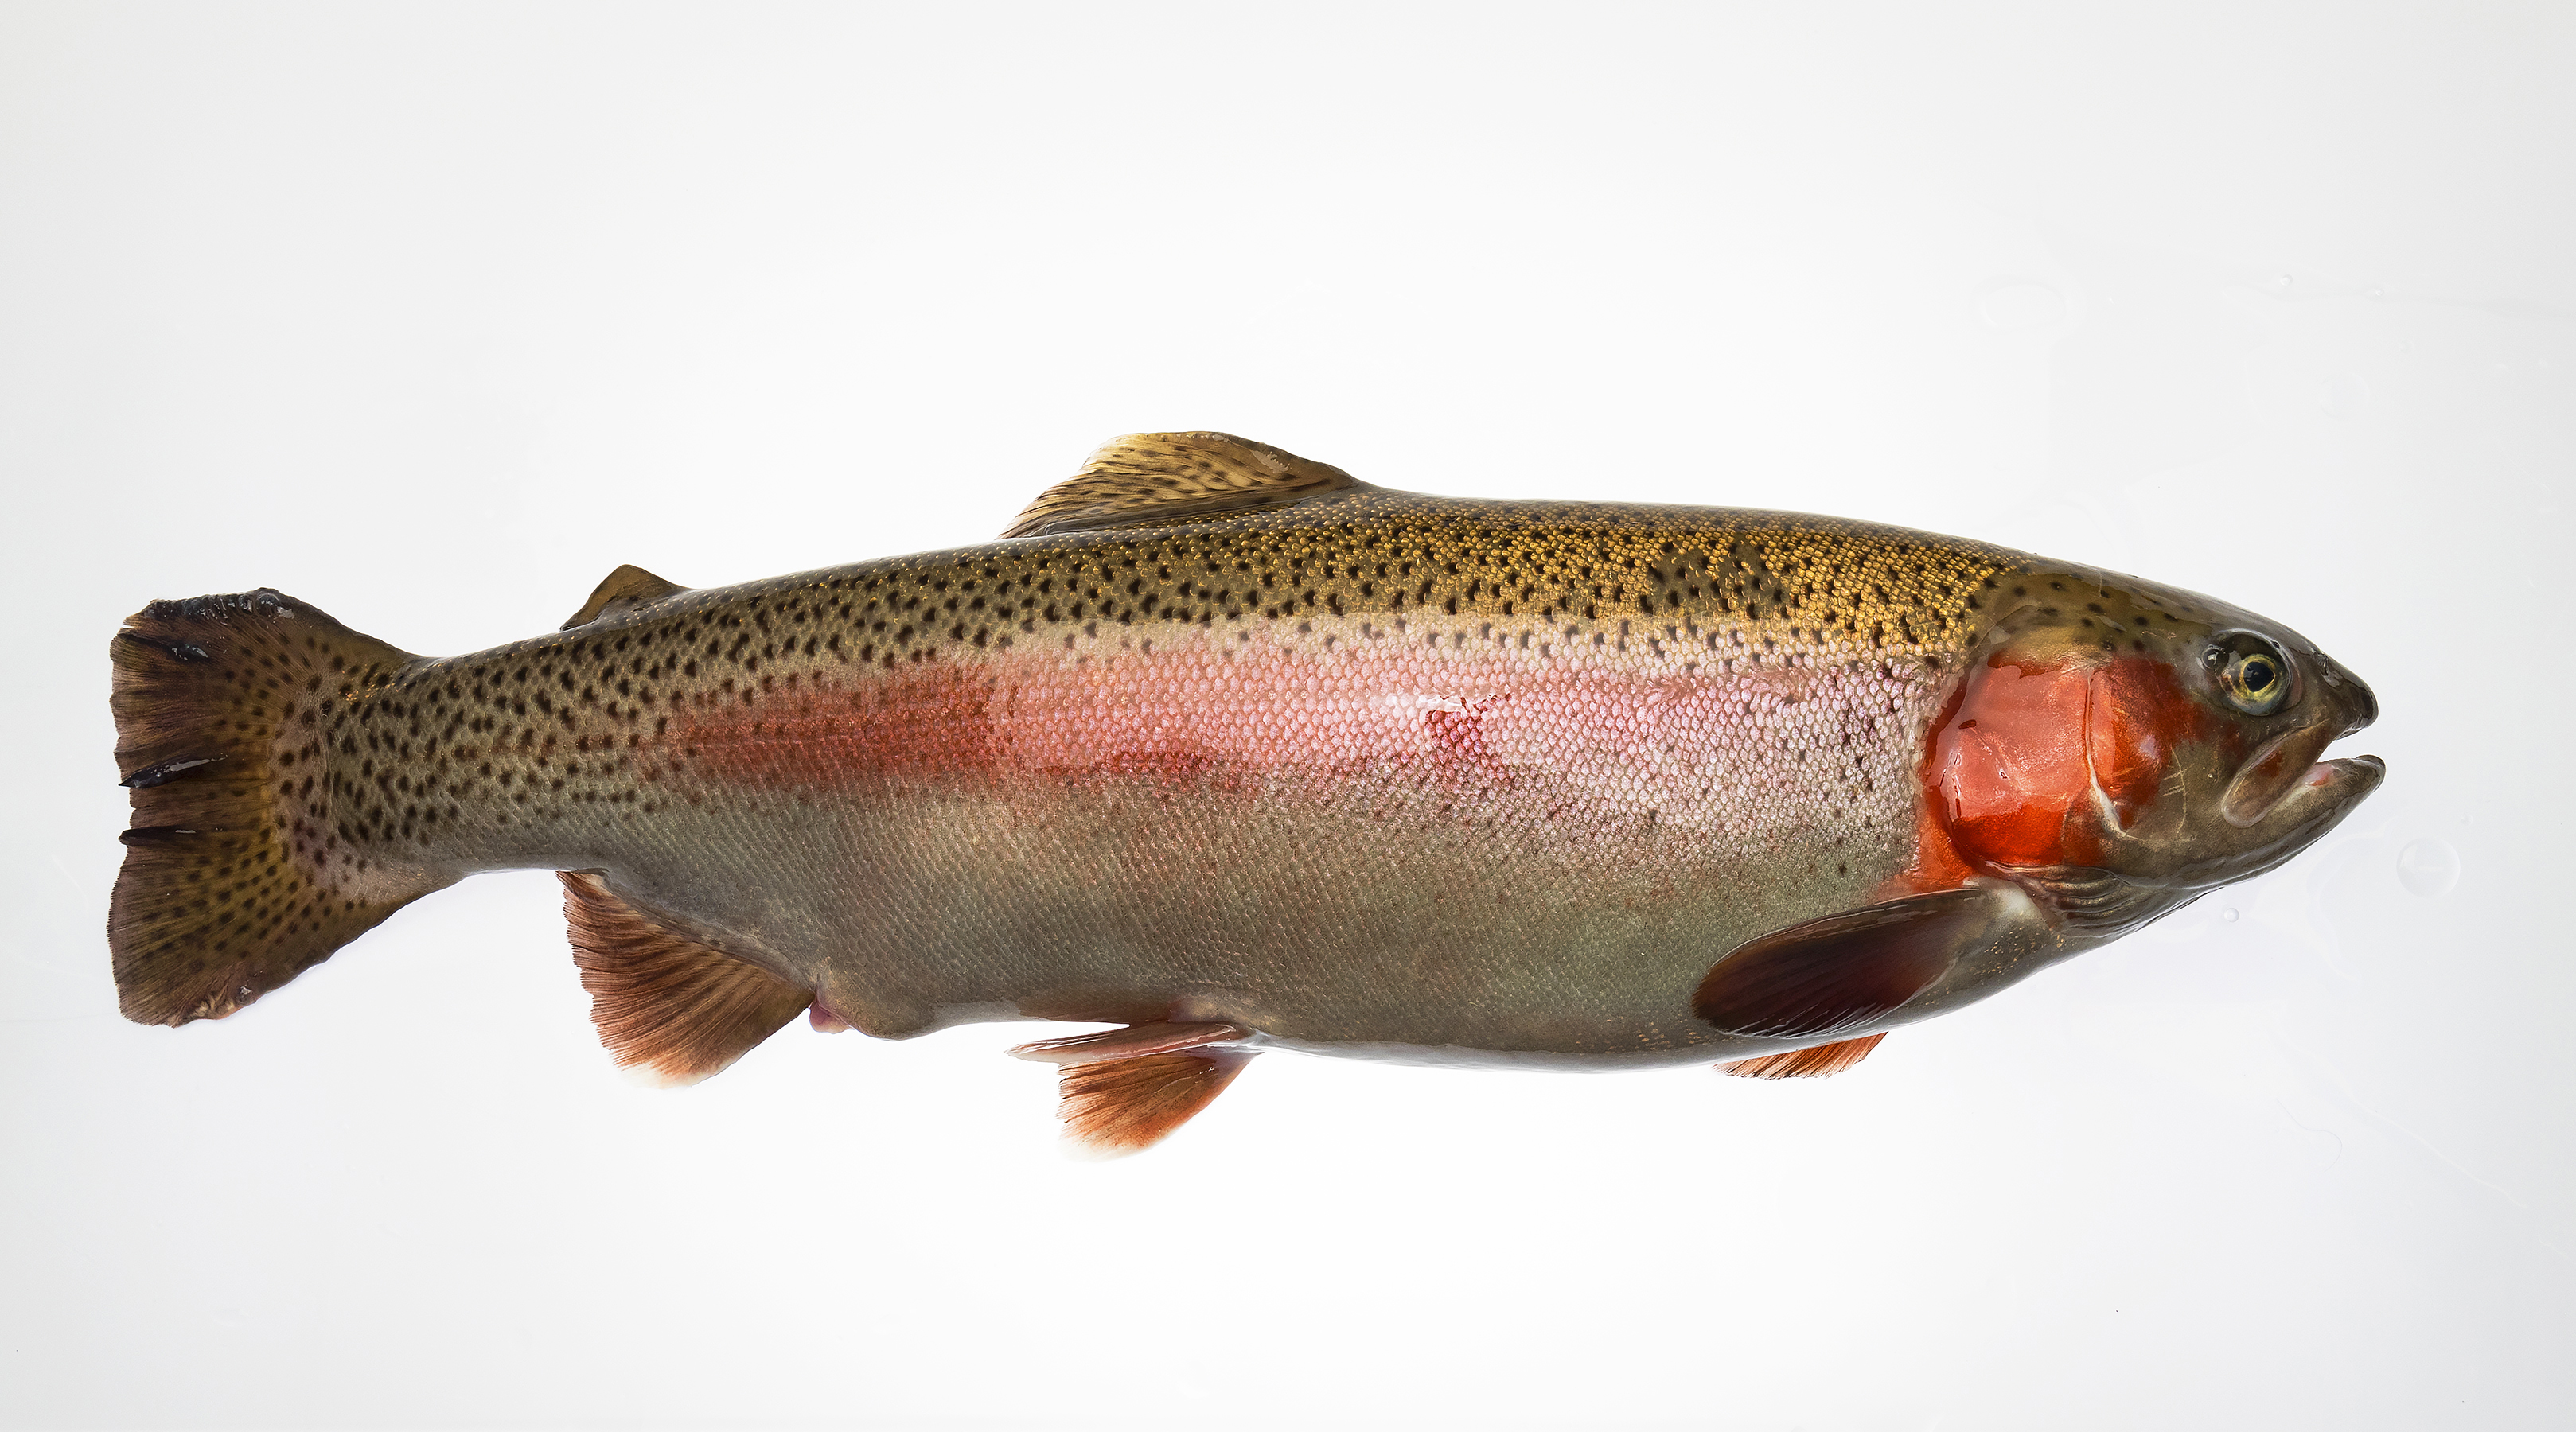 A female rainbow trout